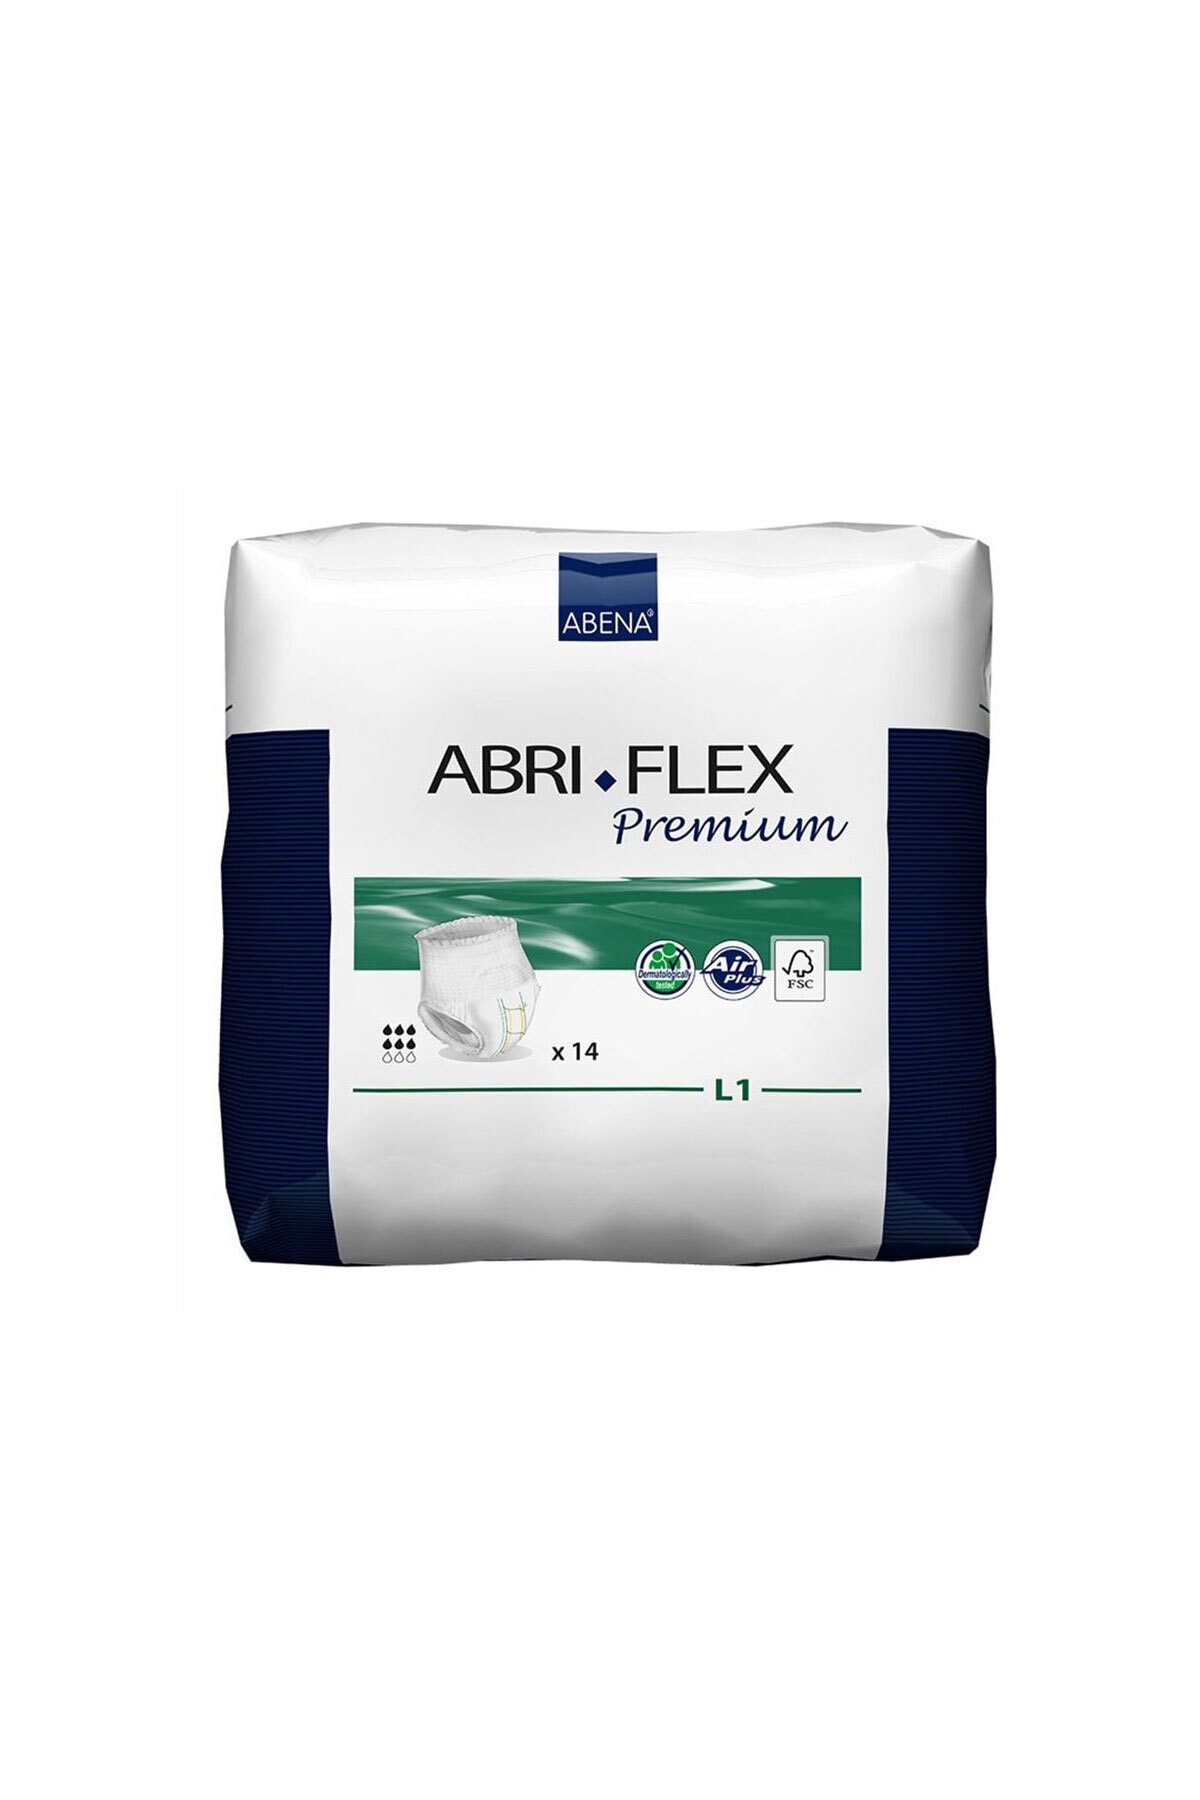 abena Abriflex Premium L1 Emici Külot